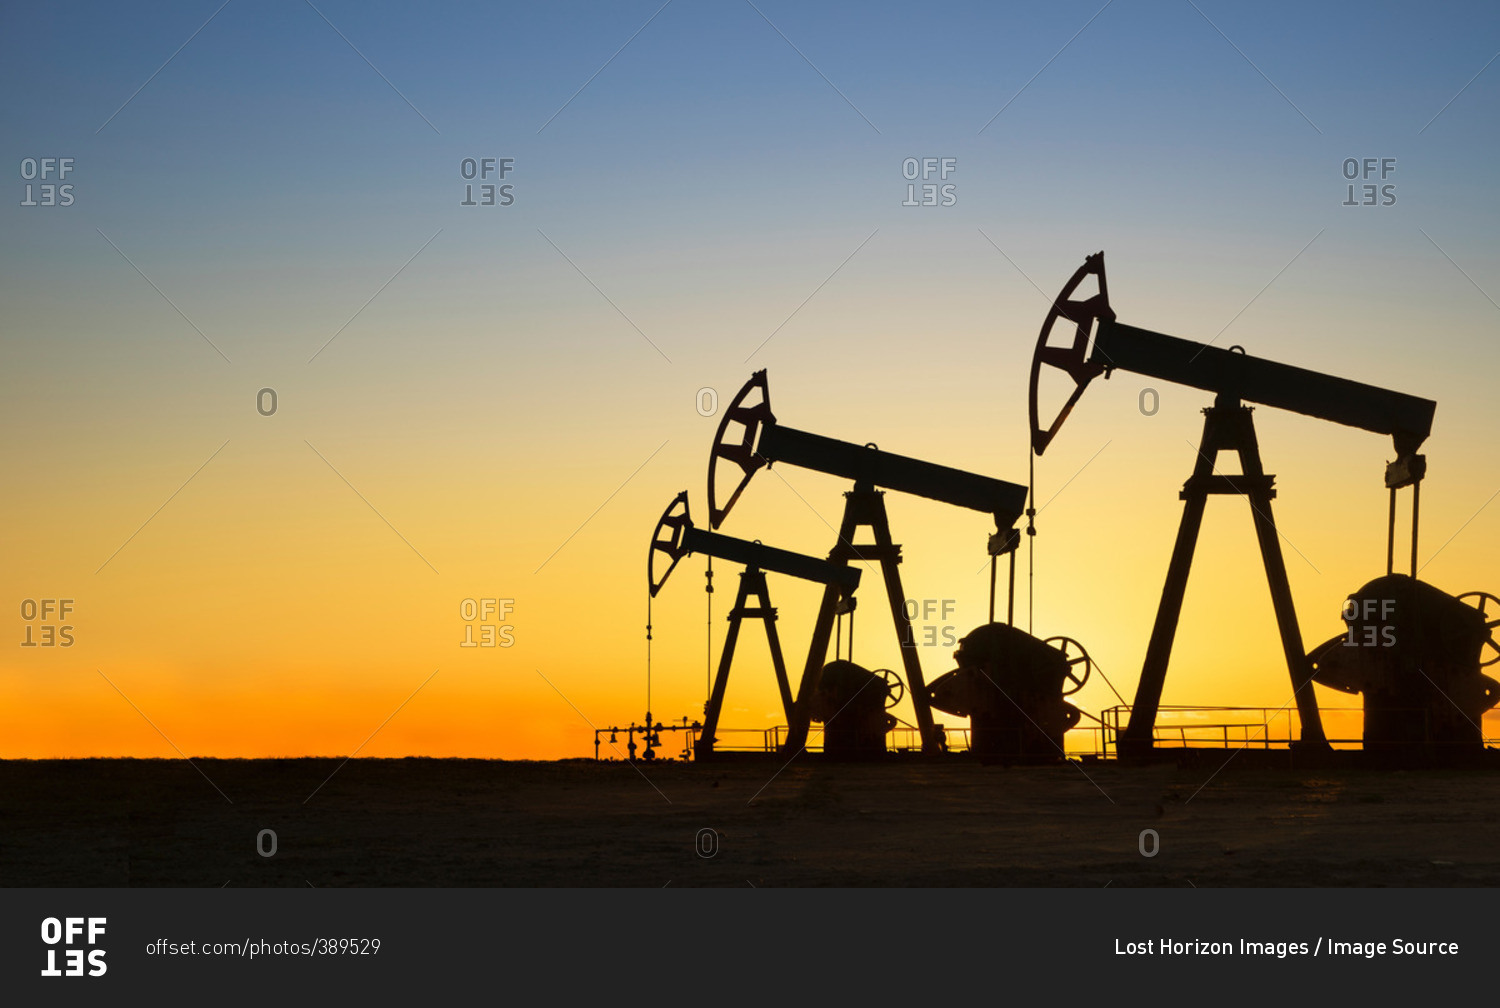 Silhouette of oil wells in desert at sunset